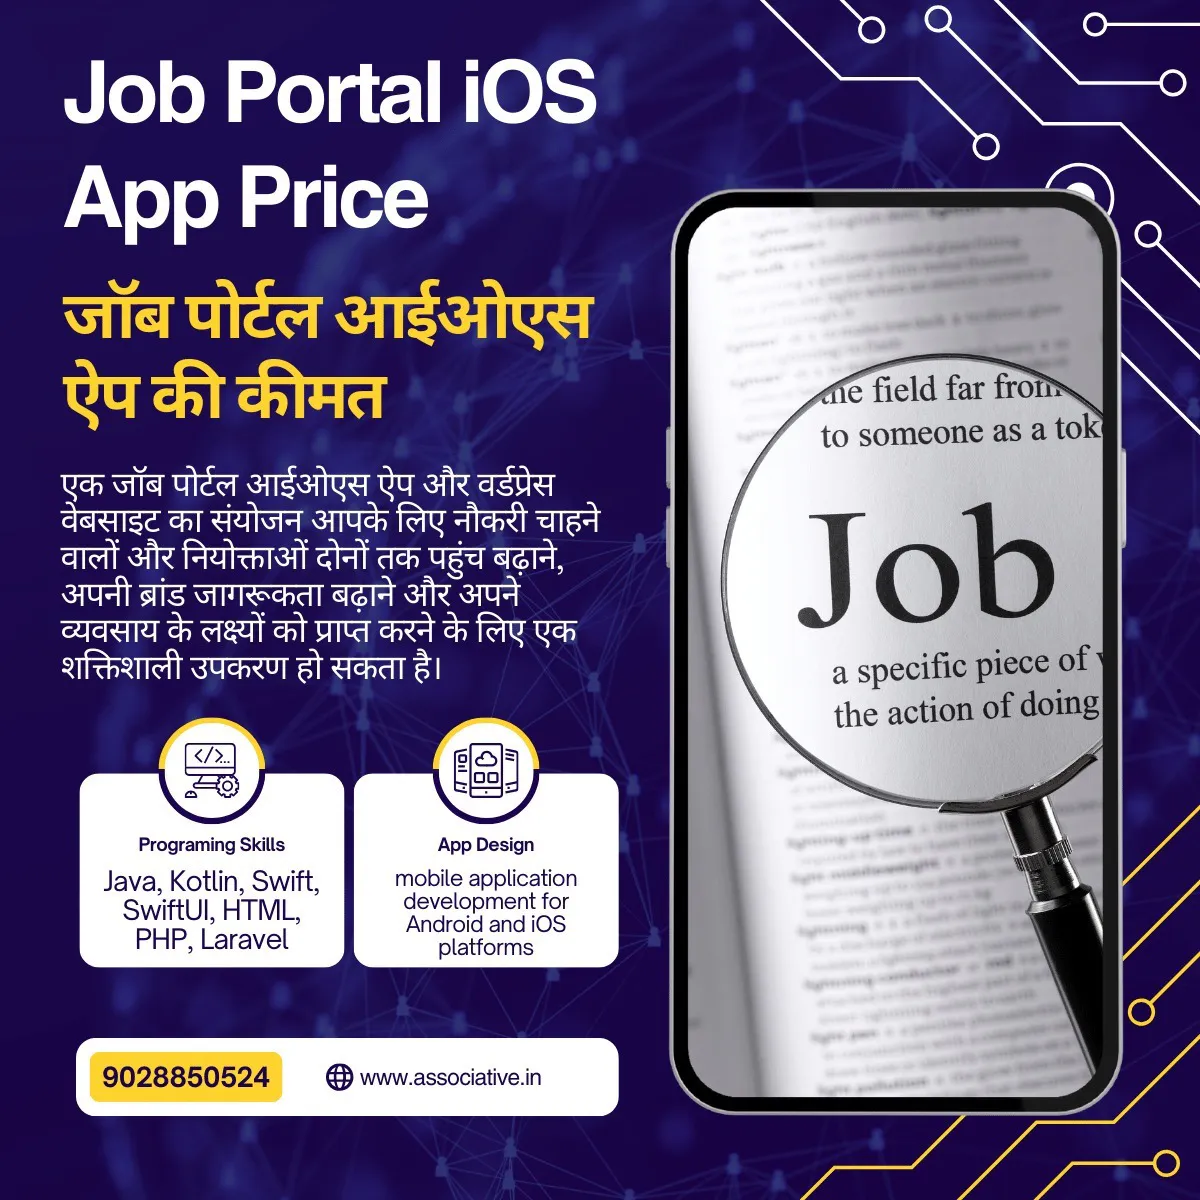 Job Portal iOS App